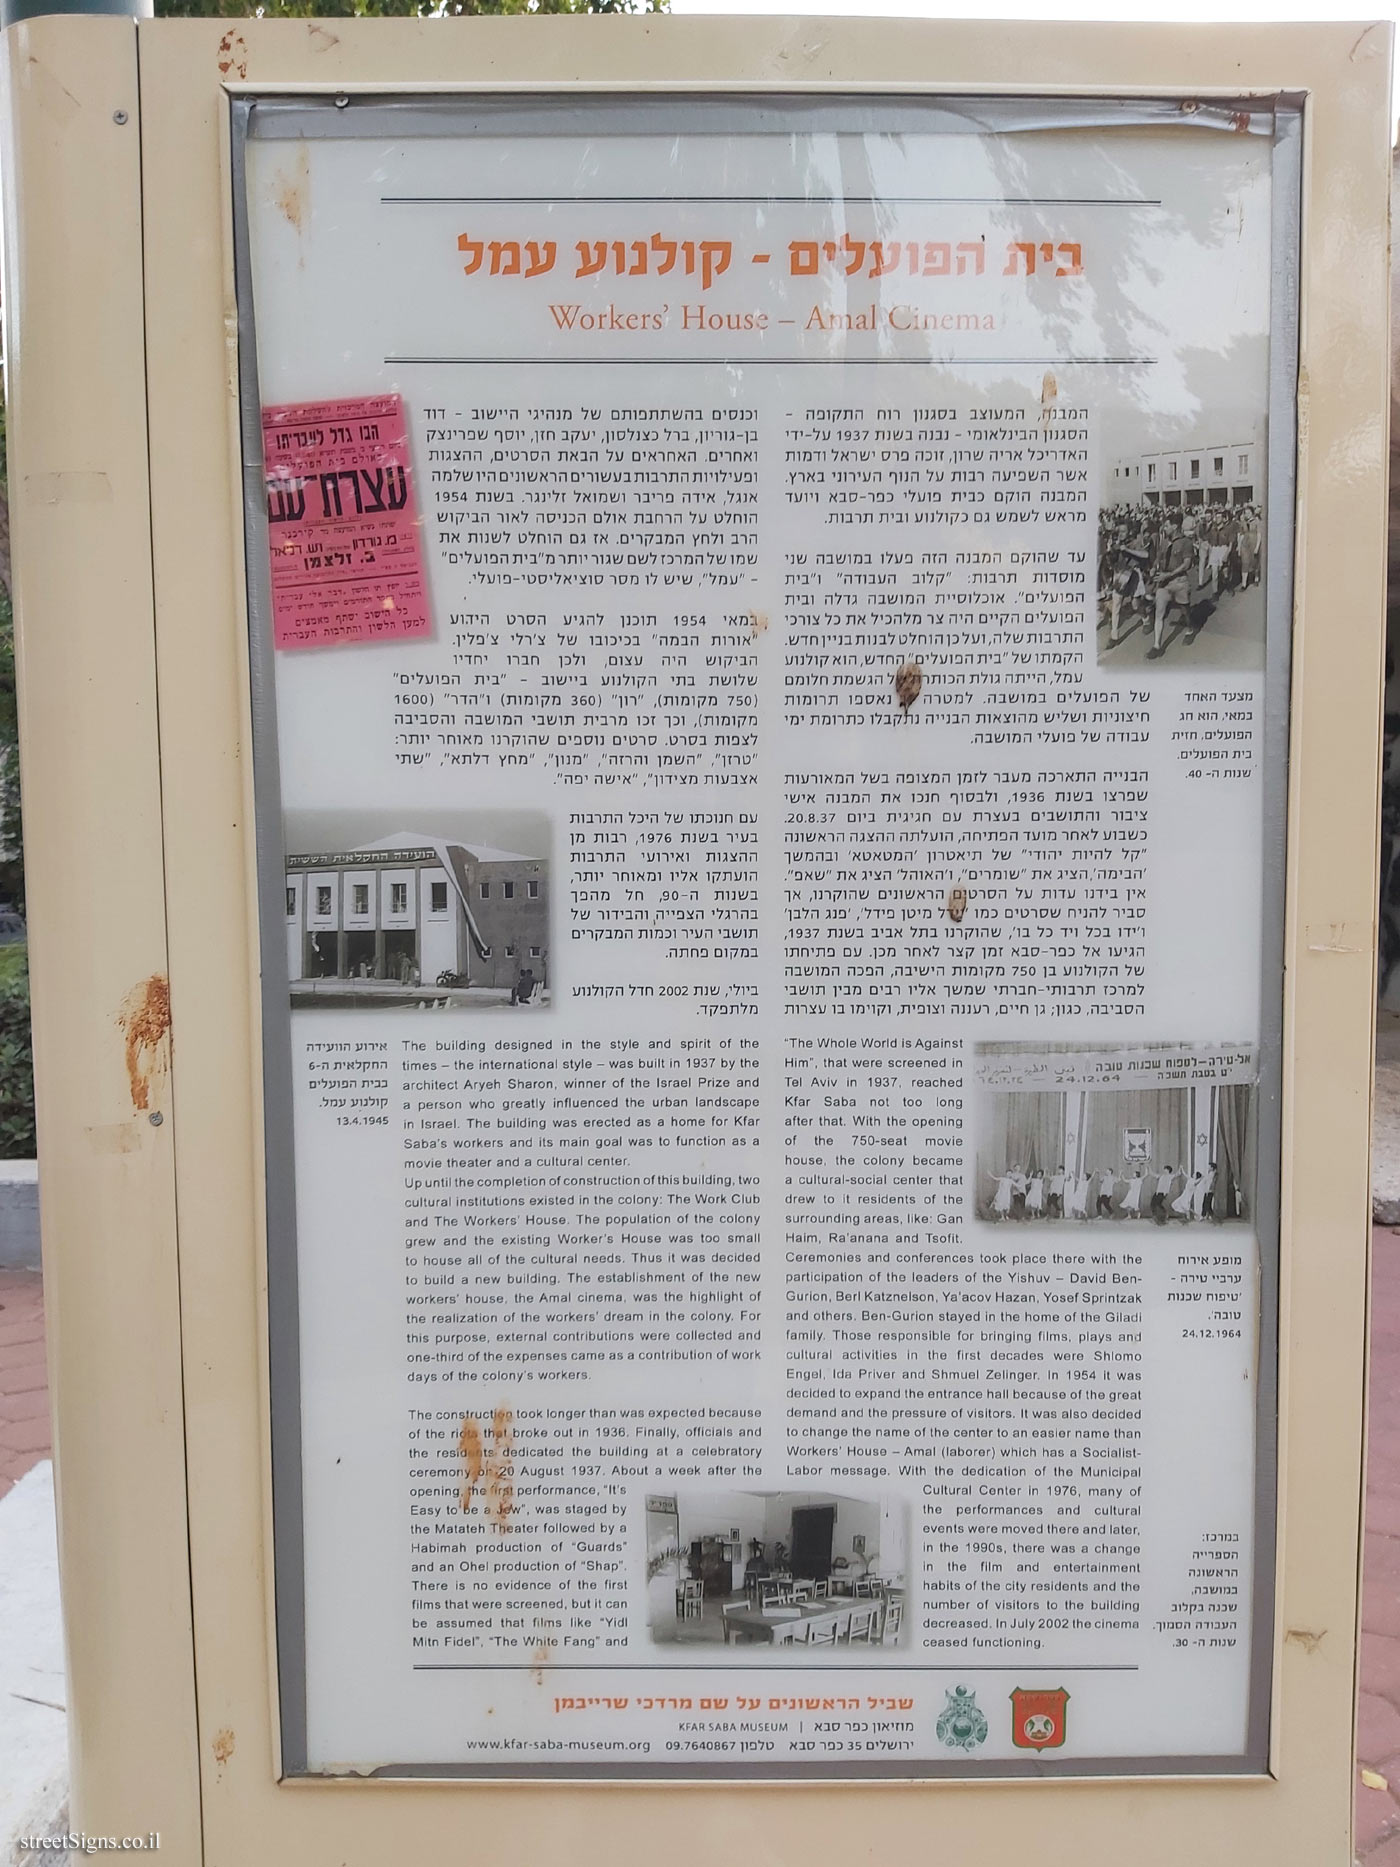 Kfar Saba - The Founders’ Path - Station 16 - Workers’ House - Amal Cinema - Ben Gurion St 57, Kefar Sava, Israel